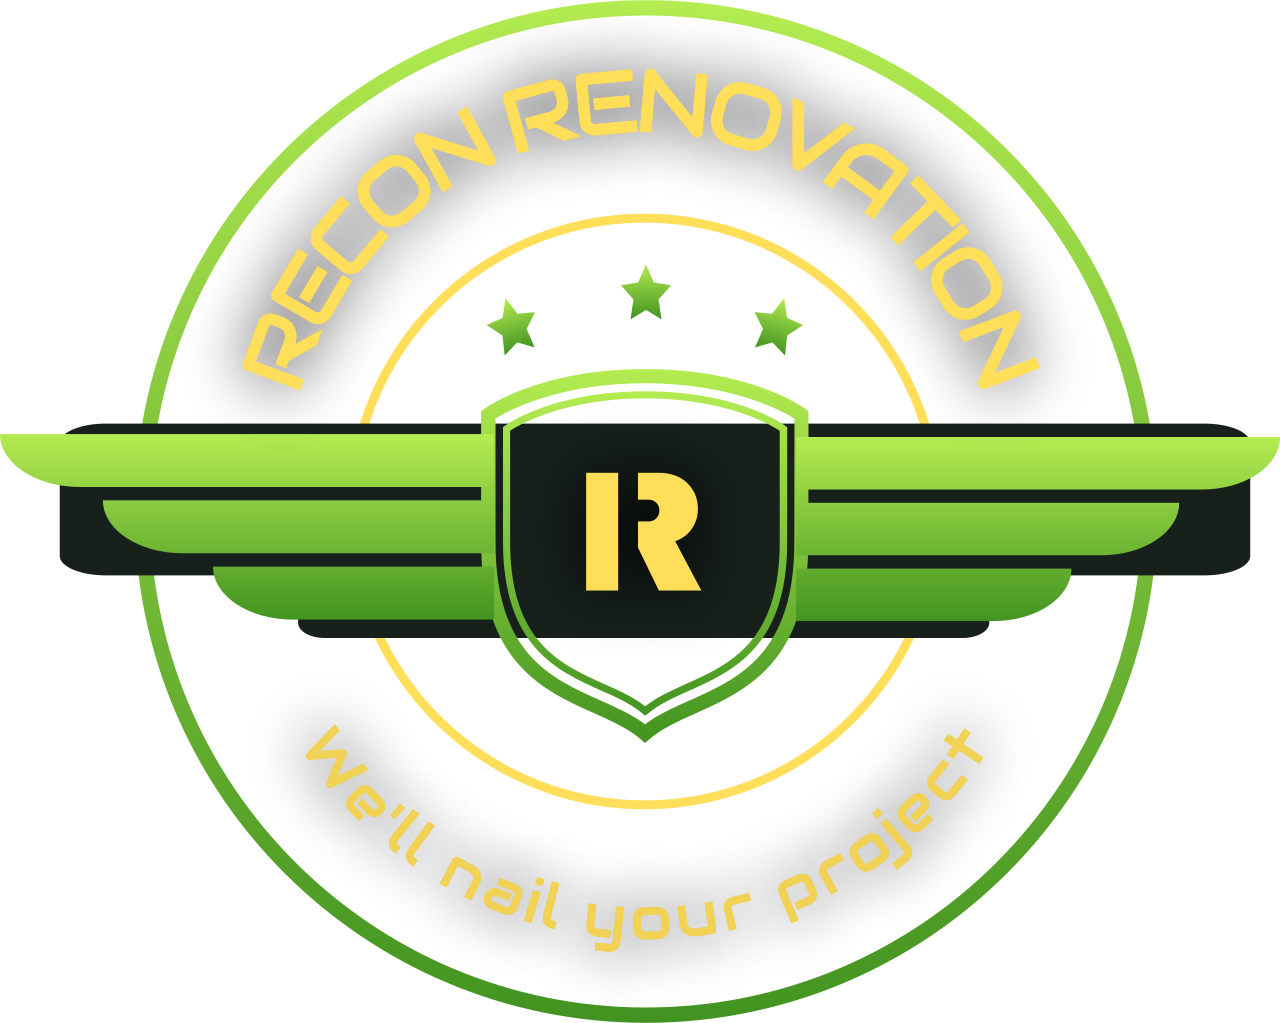 RECON RENOVATION's web page